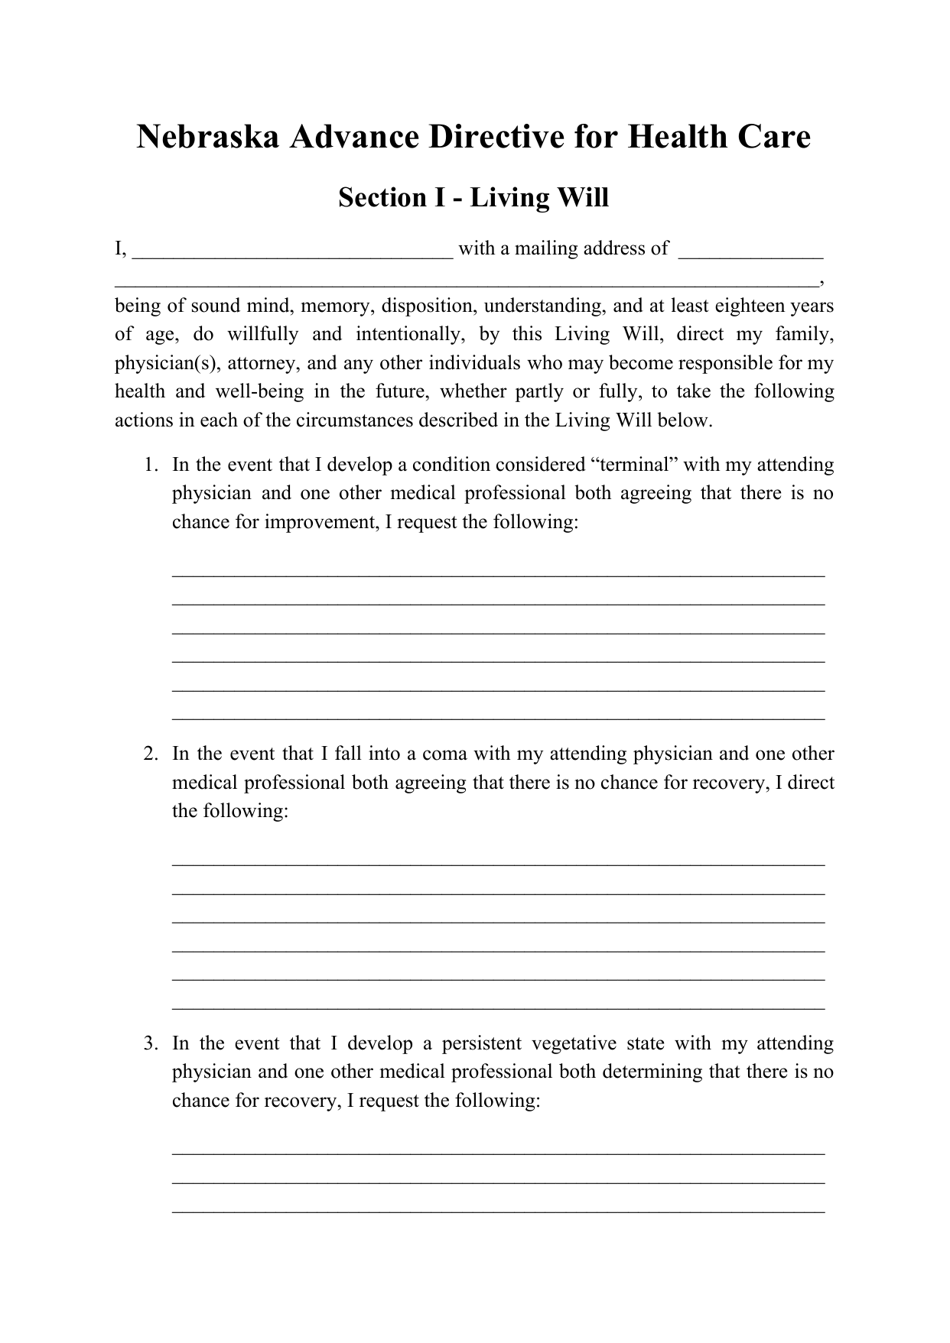 Advance Directive for Health Care Form - Nebraska, Page 1